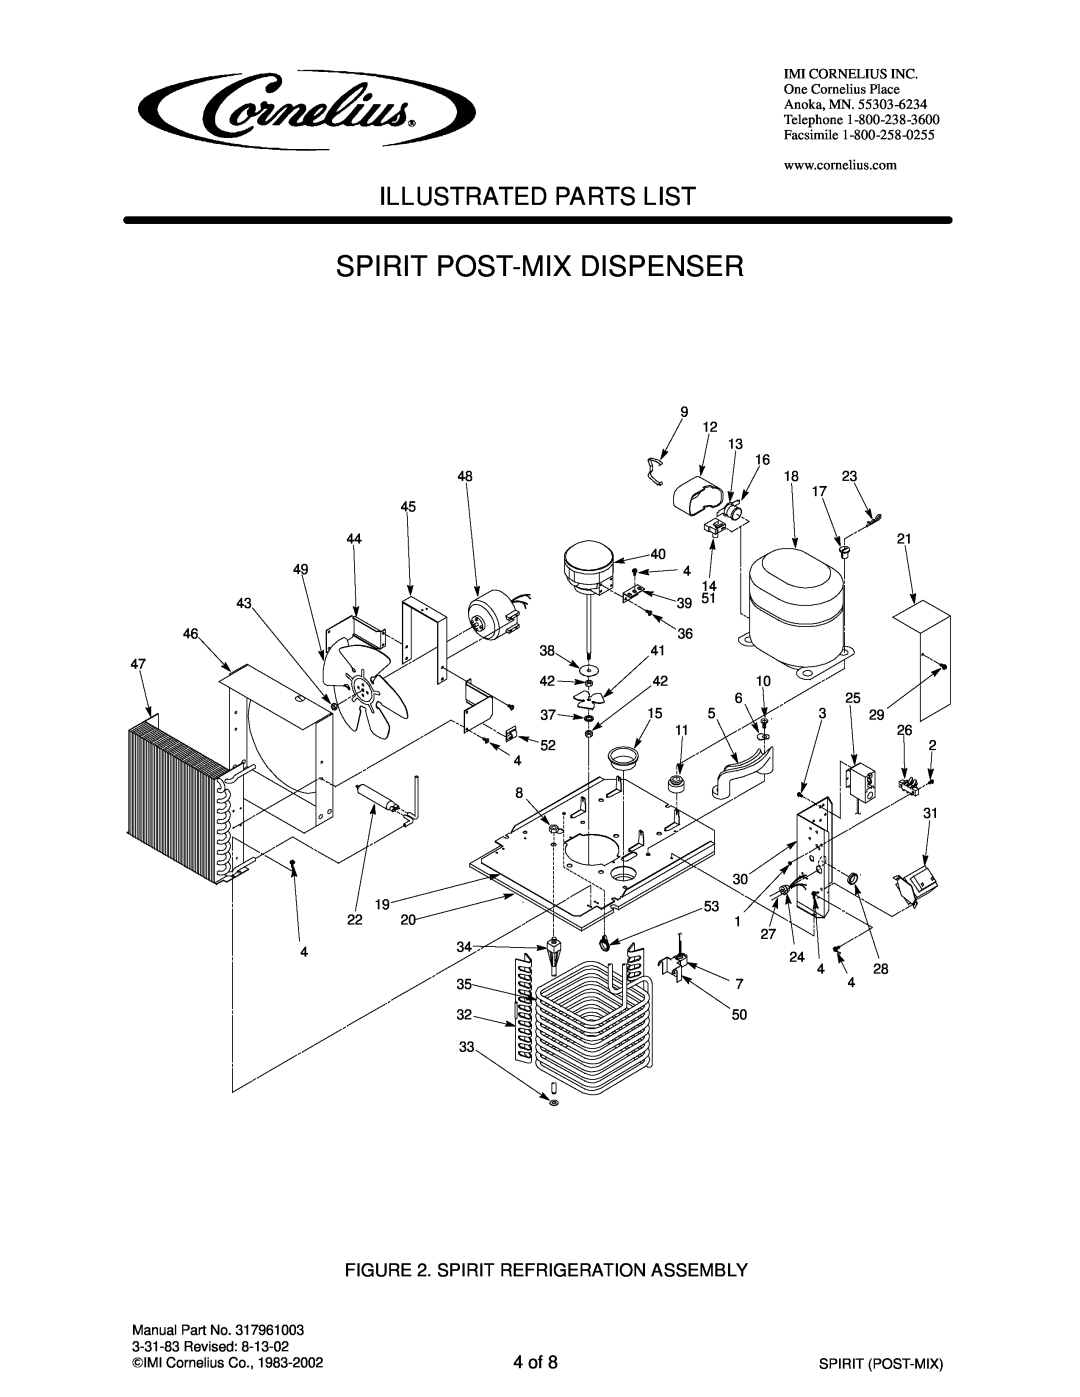 Cornelius 414384-XXX, 414385-XXX Spirit Refrigeration Assembly, 4 of, Spirit Post-Mix Dispenser, Illustrated Parts List 